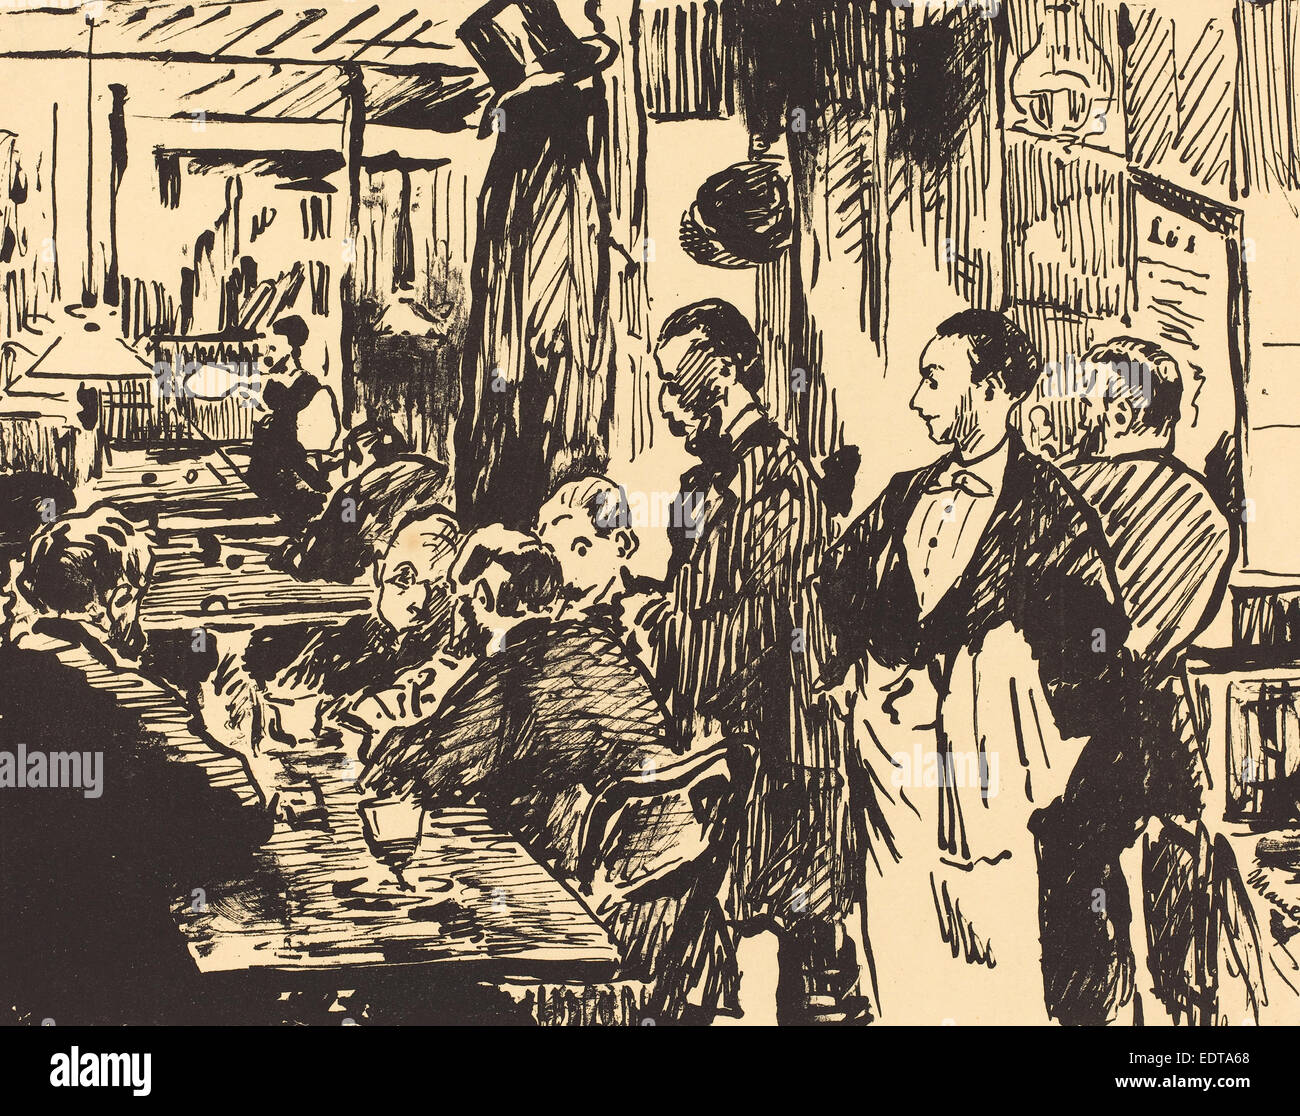 Edouard Manet (French, 1832 - 1883), At the Café (Au café), 1869, transfer lithograph Stock Photo